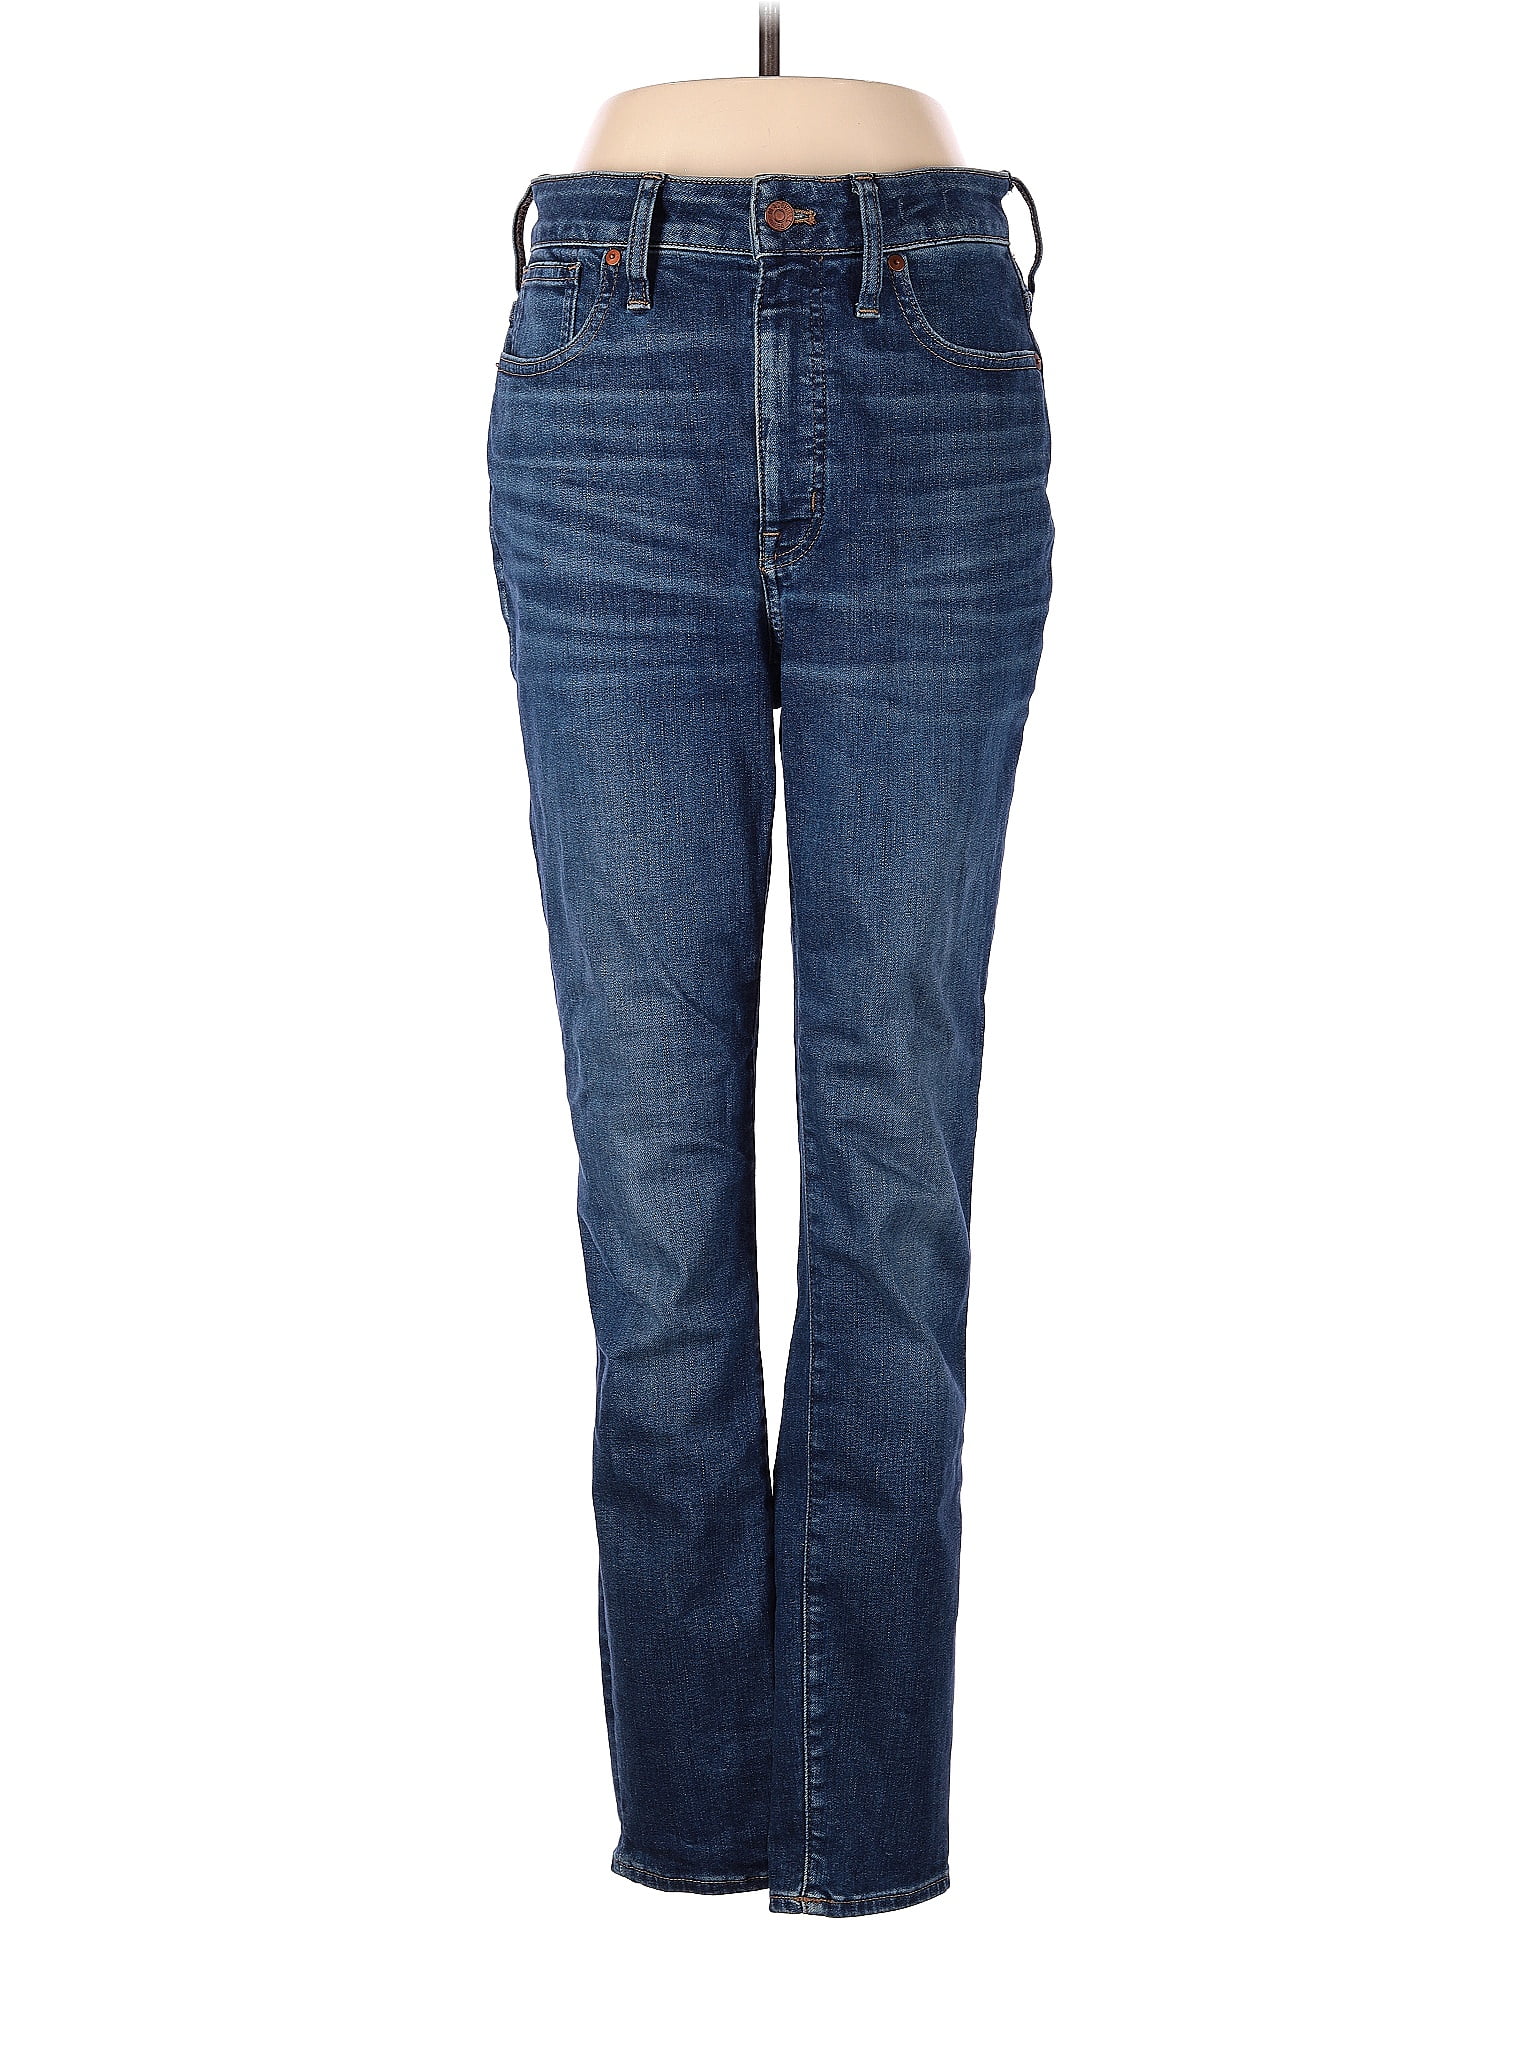 Madewell Solid Blue Jeans 29 Waist - 69% off | ThredUp